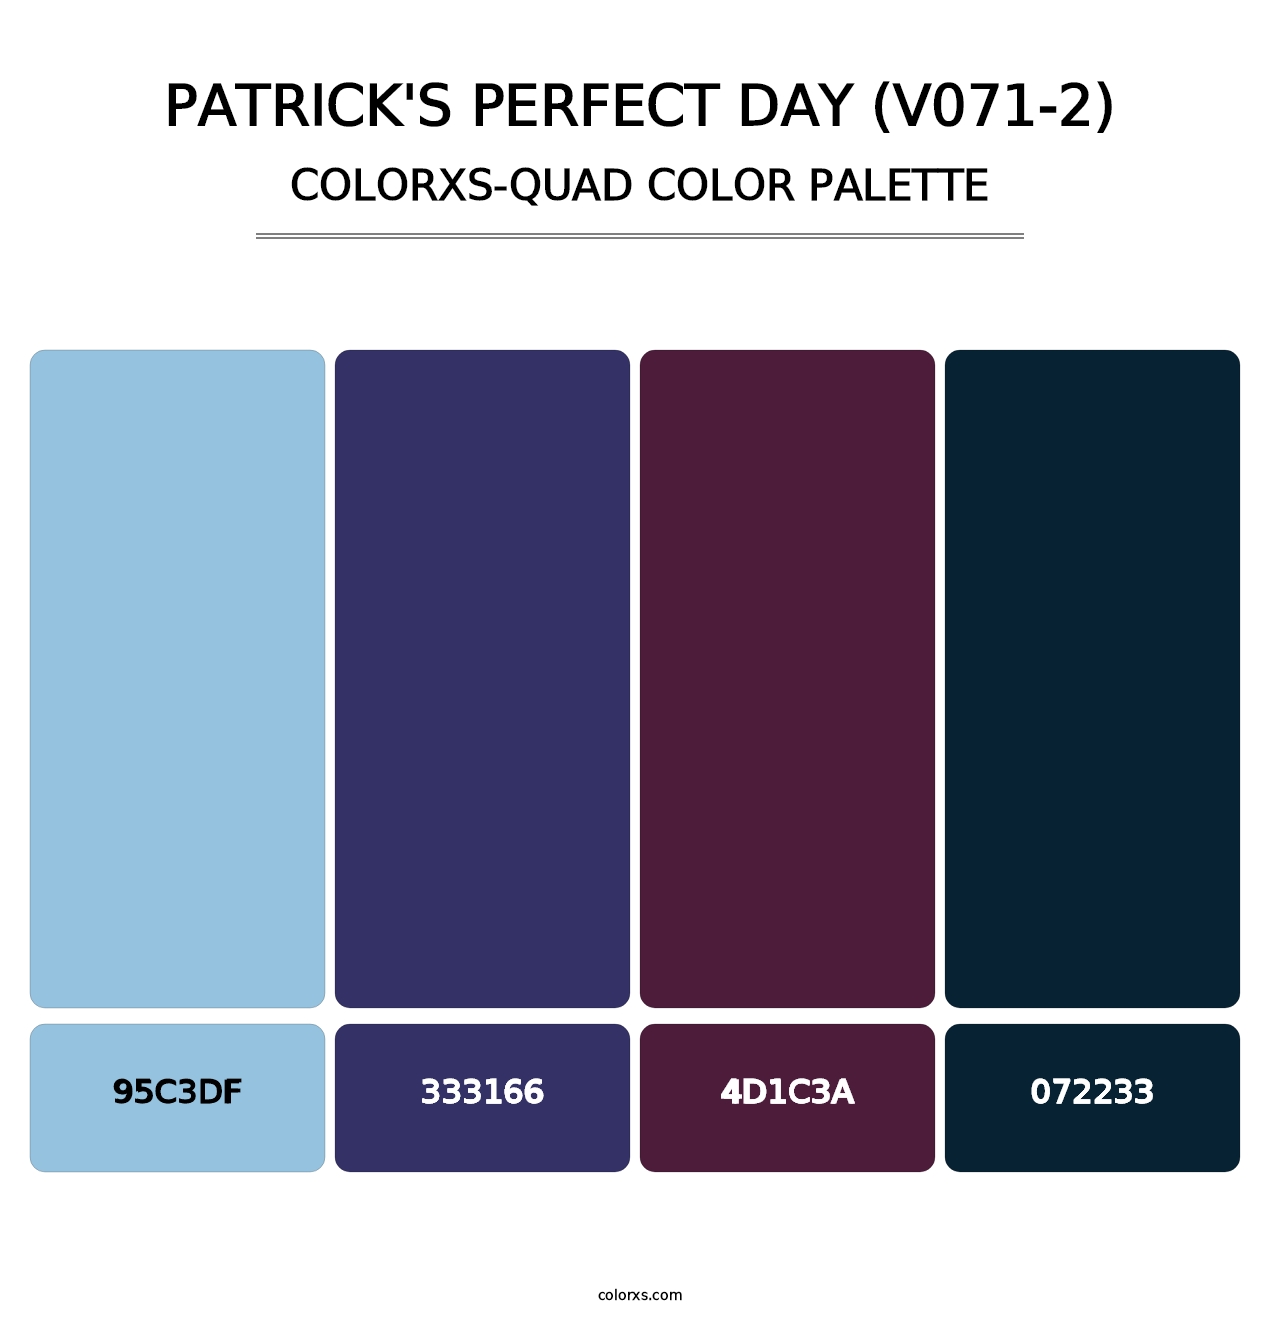 Patrick's Perfect Day (V071-2) - Colorxs Quad Palette